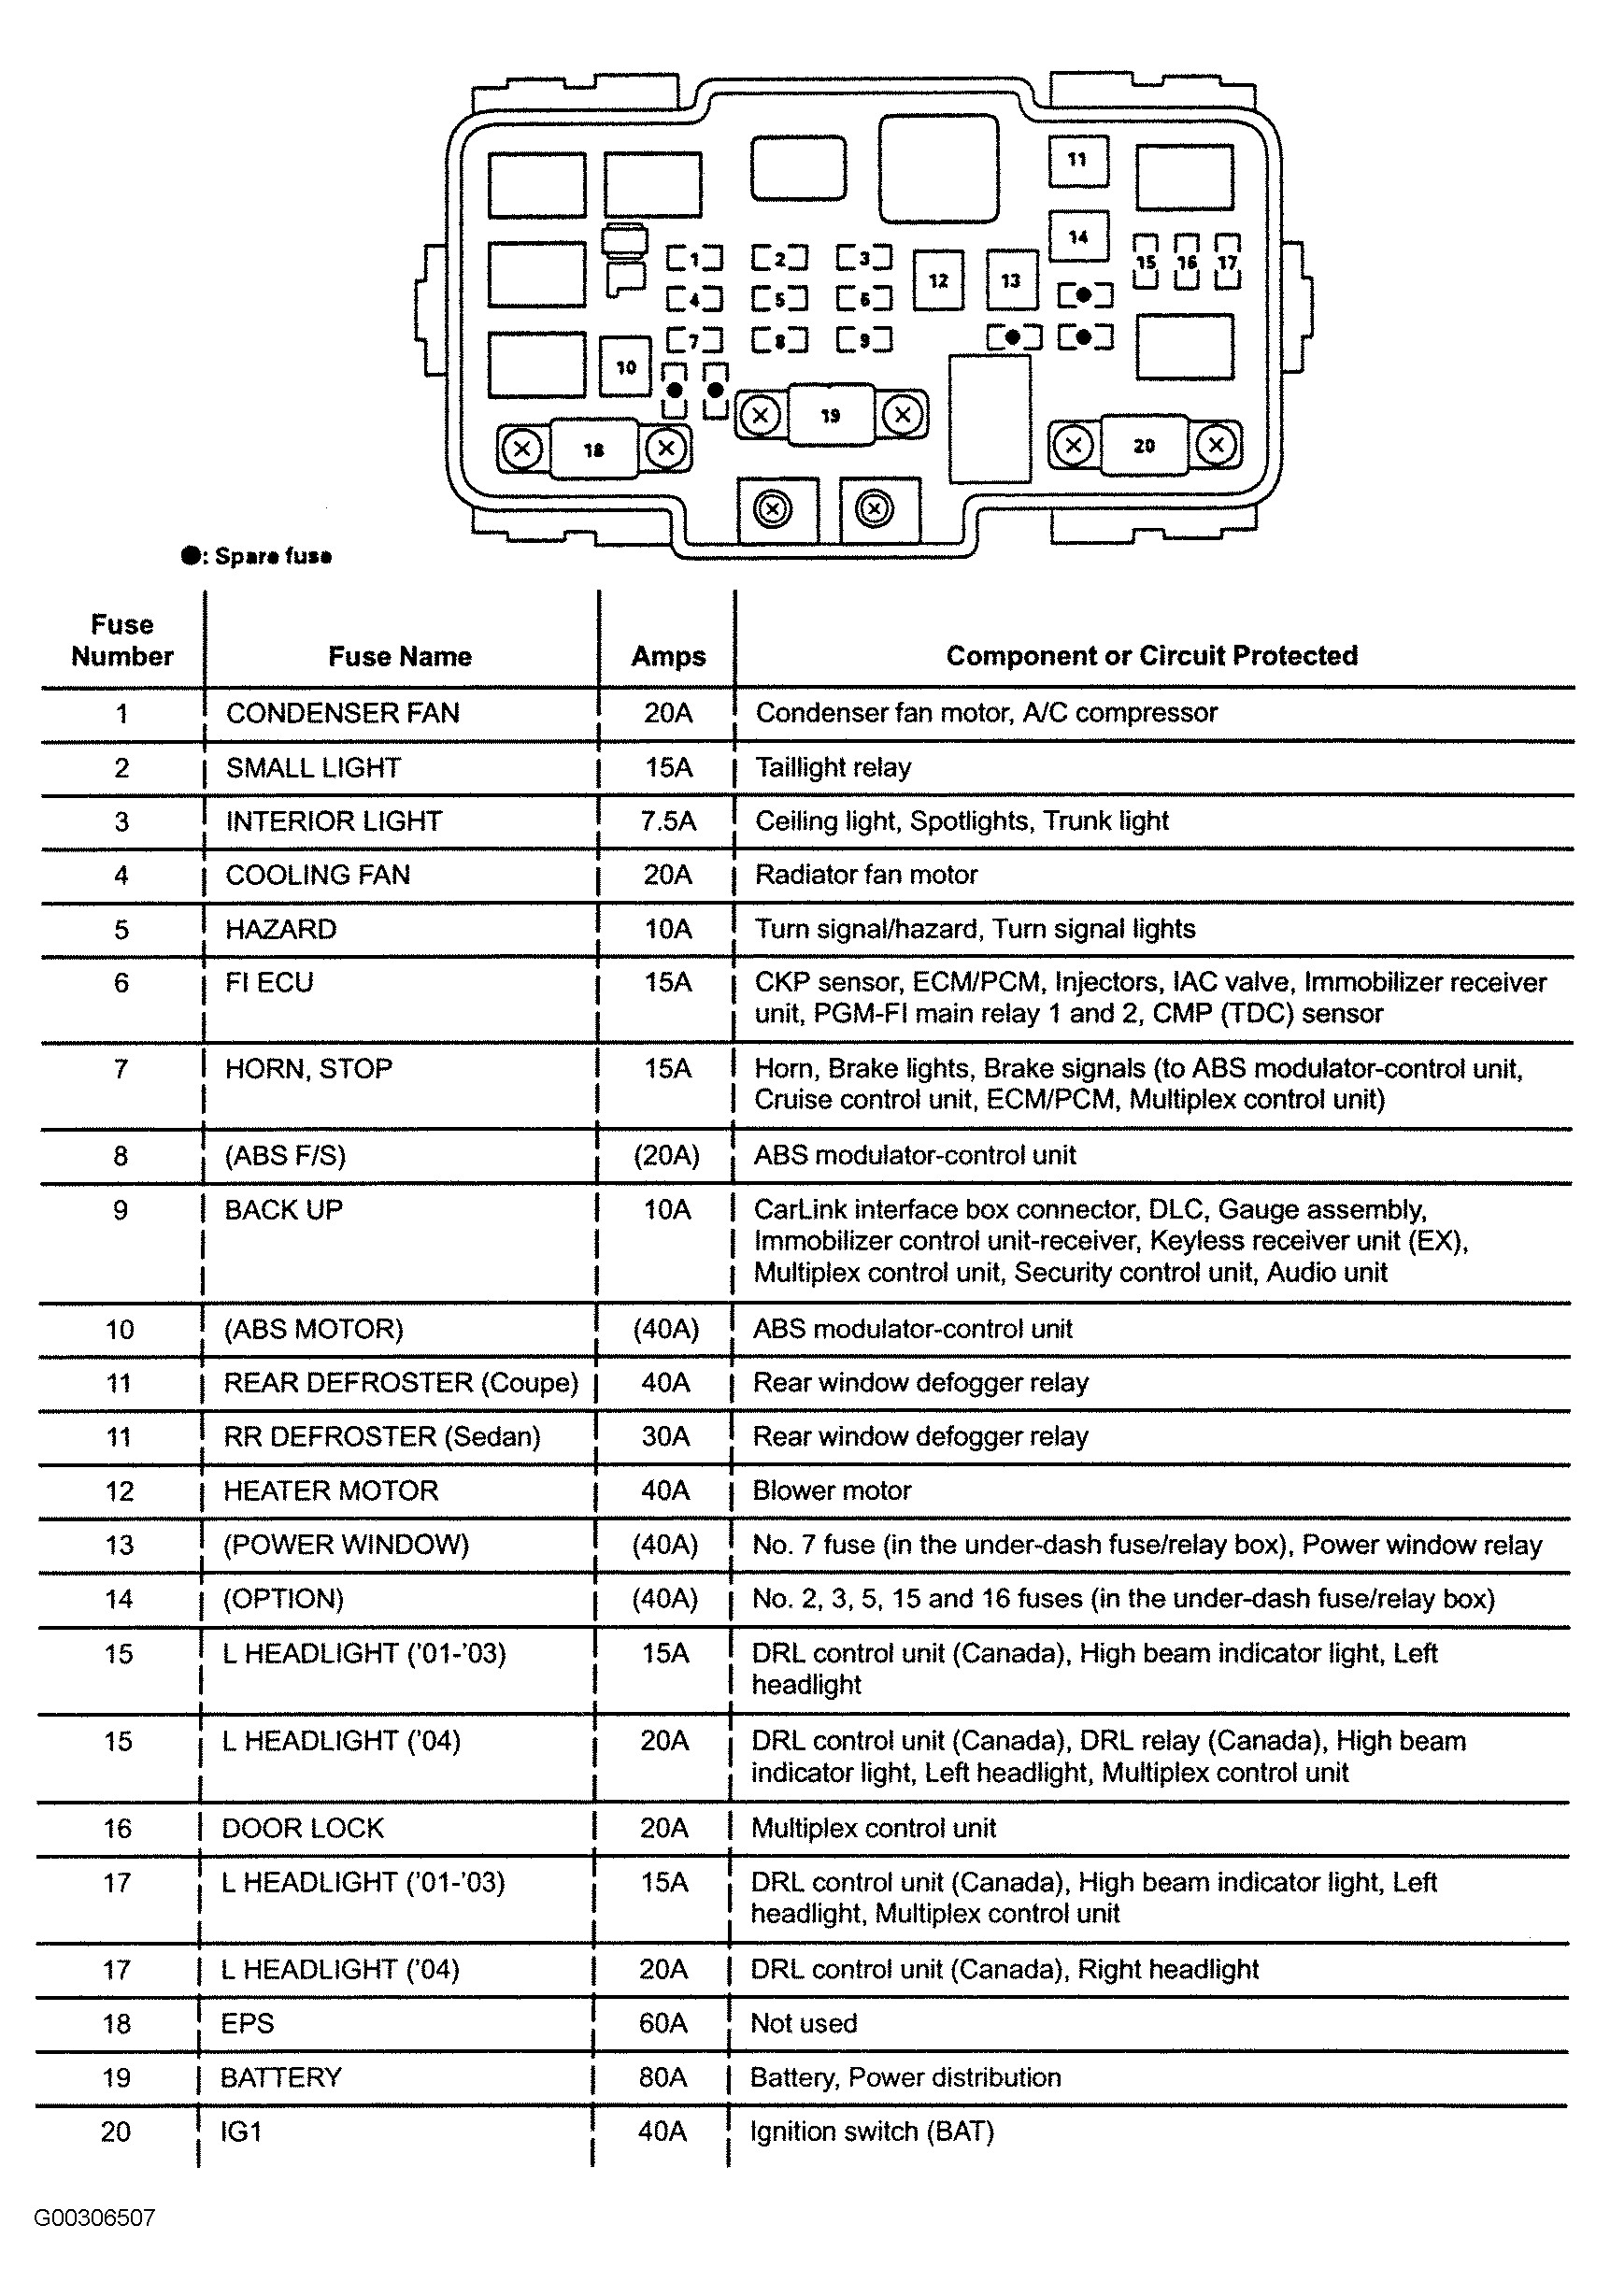 Honda Civic Engine Diagram Cr V Fuse Box Diagram Besides Honda Civic Wiring Diagram 2005 Of Honda Civic Engine Diagram